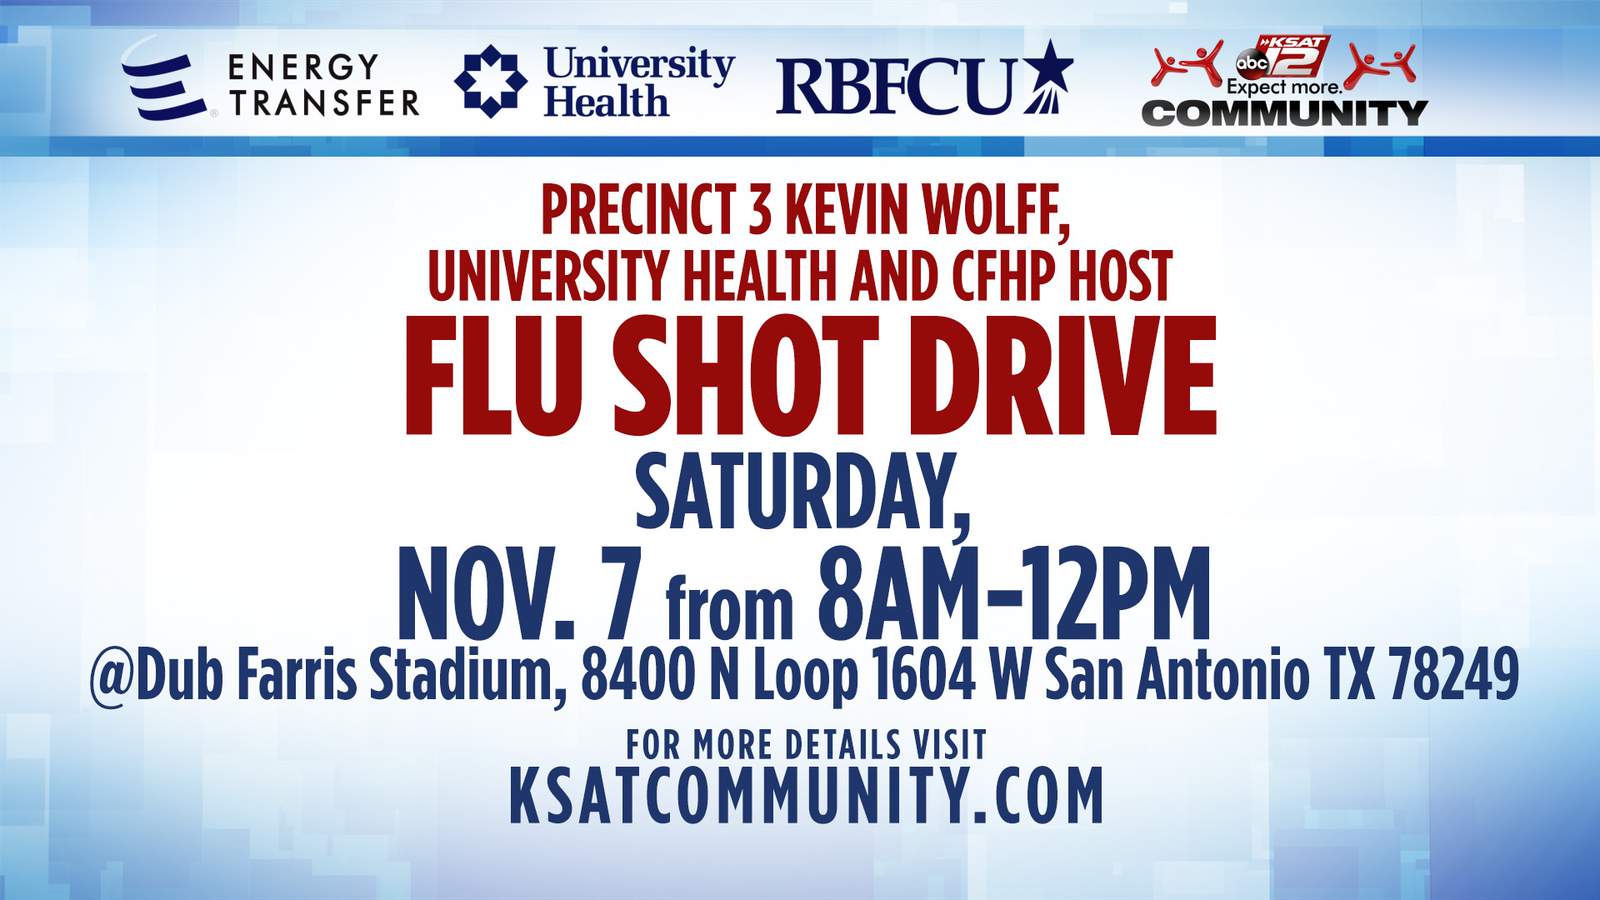 KSAT Community: University Health to host flu shot drive Saturday